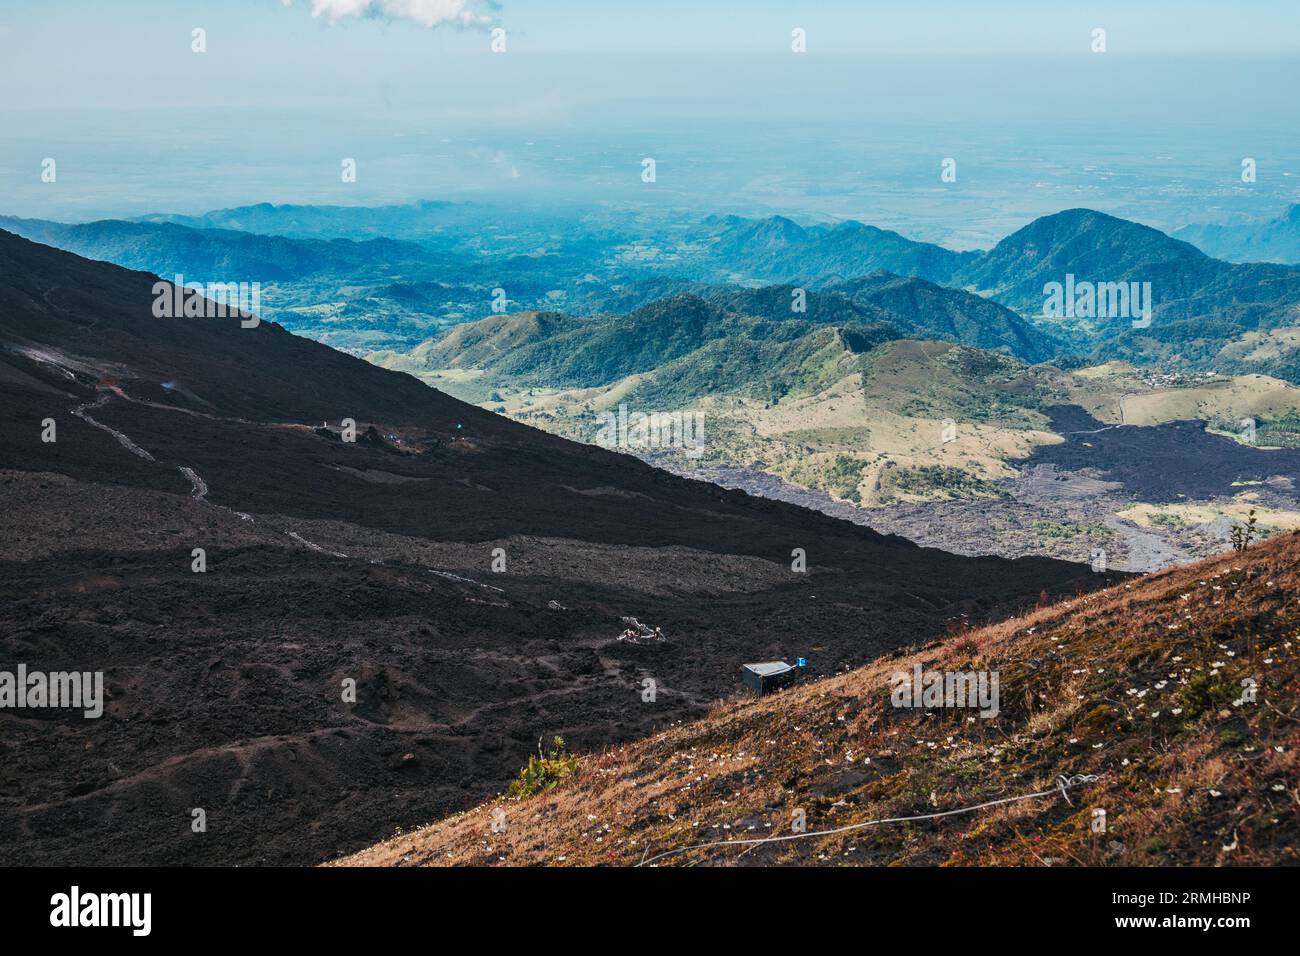 Le scure e calde pendici vulcaniche del vulcano Pacaya, Guatemala Foto Stock